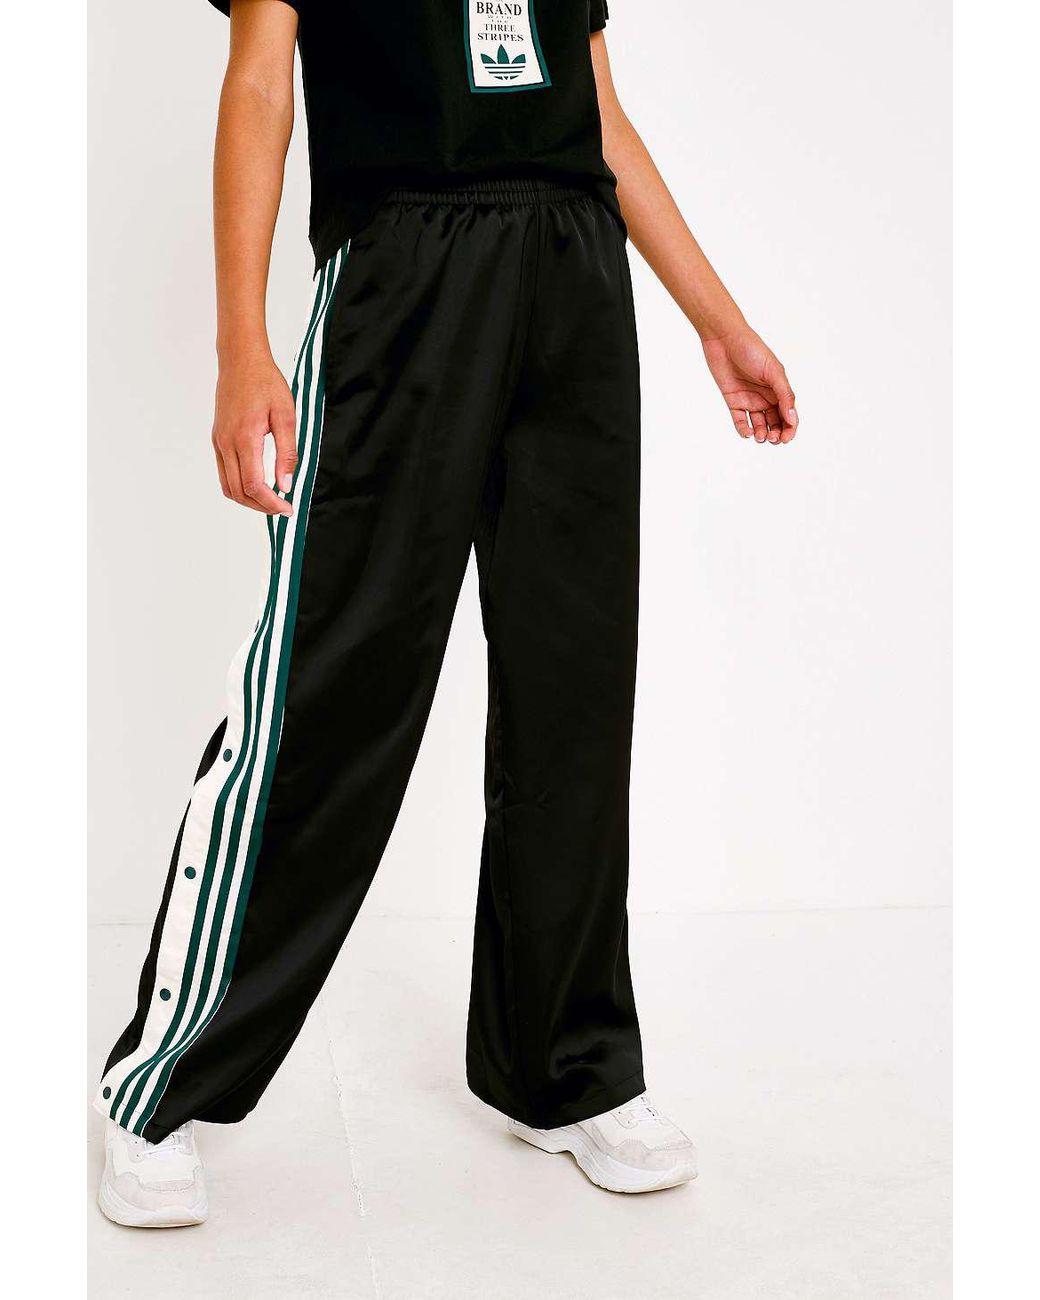 adidas Originals Adibreak 3-stripe Black And Green Popper Track Pants |  Lyst UK